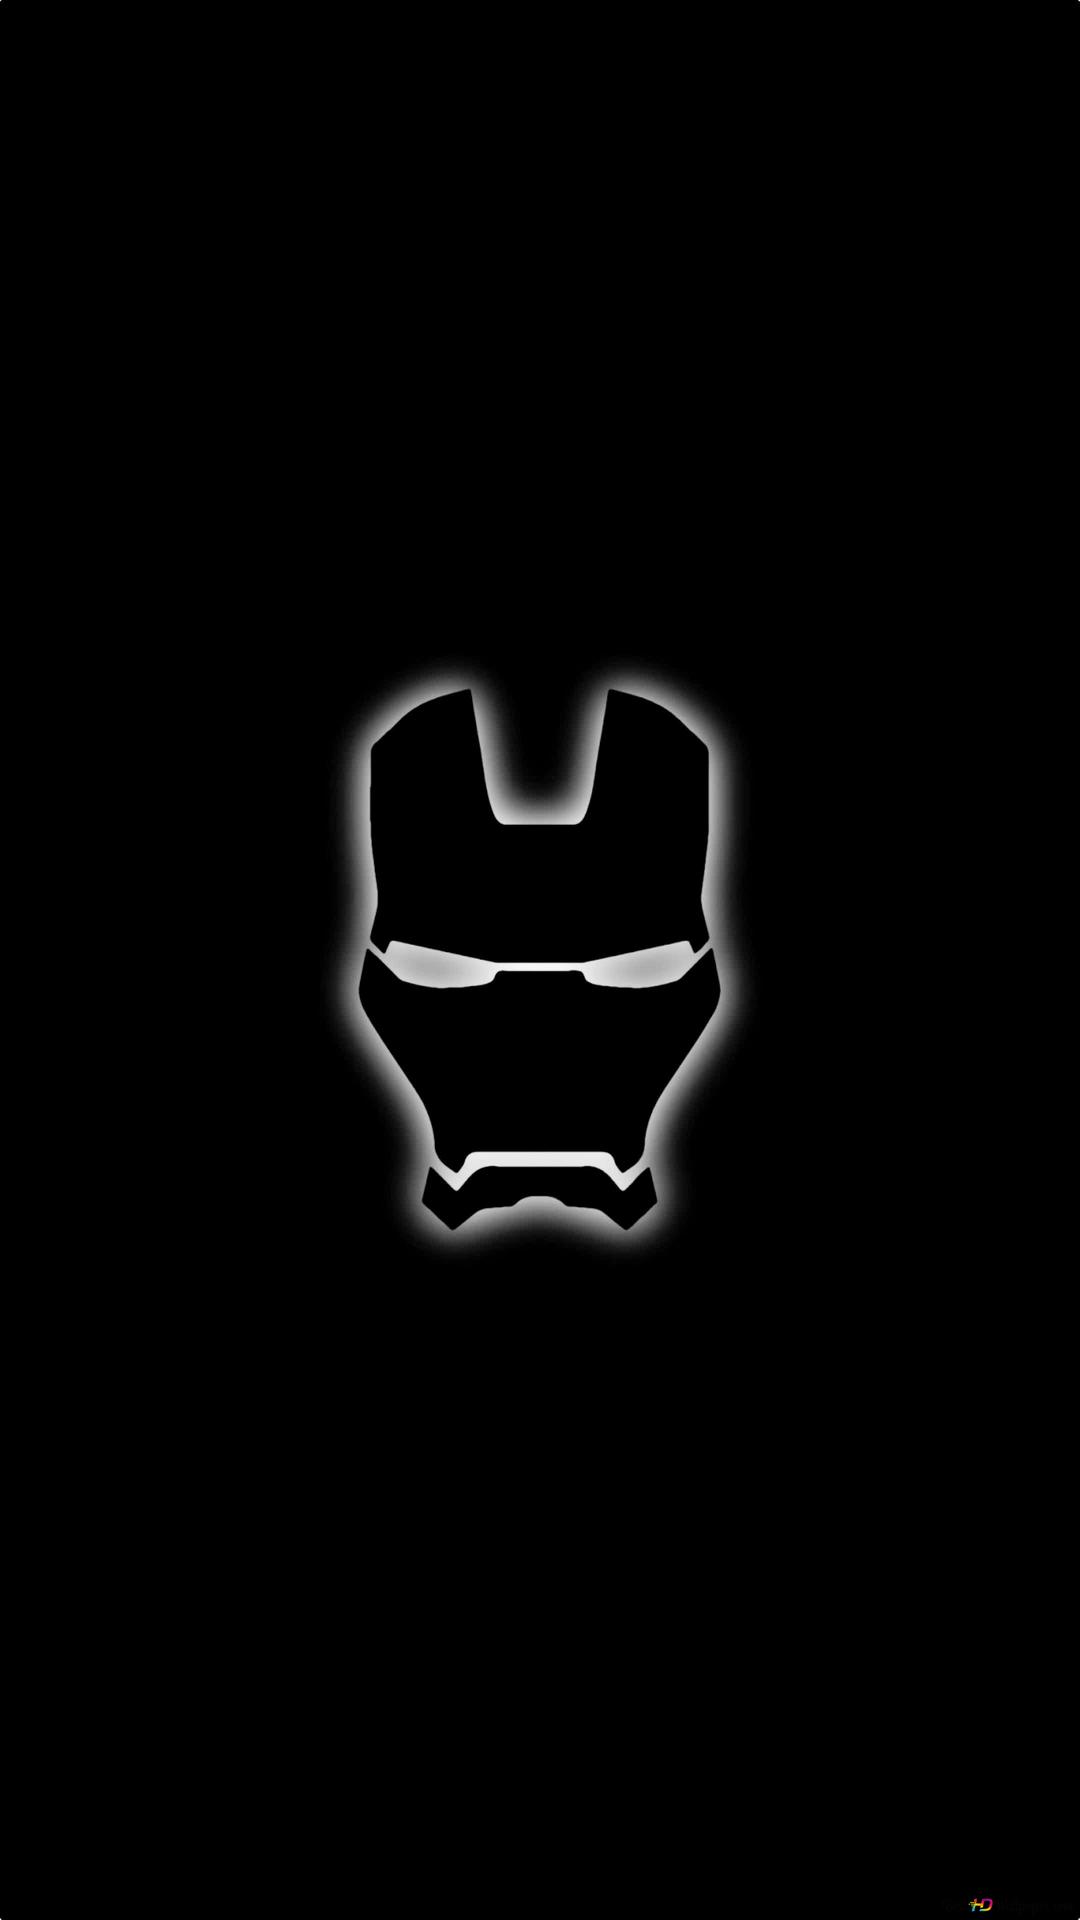 Black and white minimalist logo of Iron Man movie superhero 2K wallpaper download